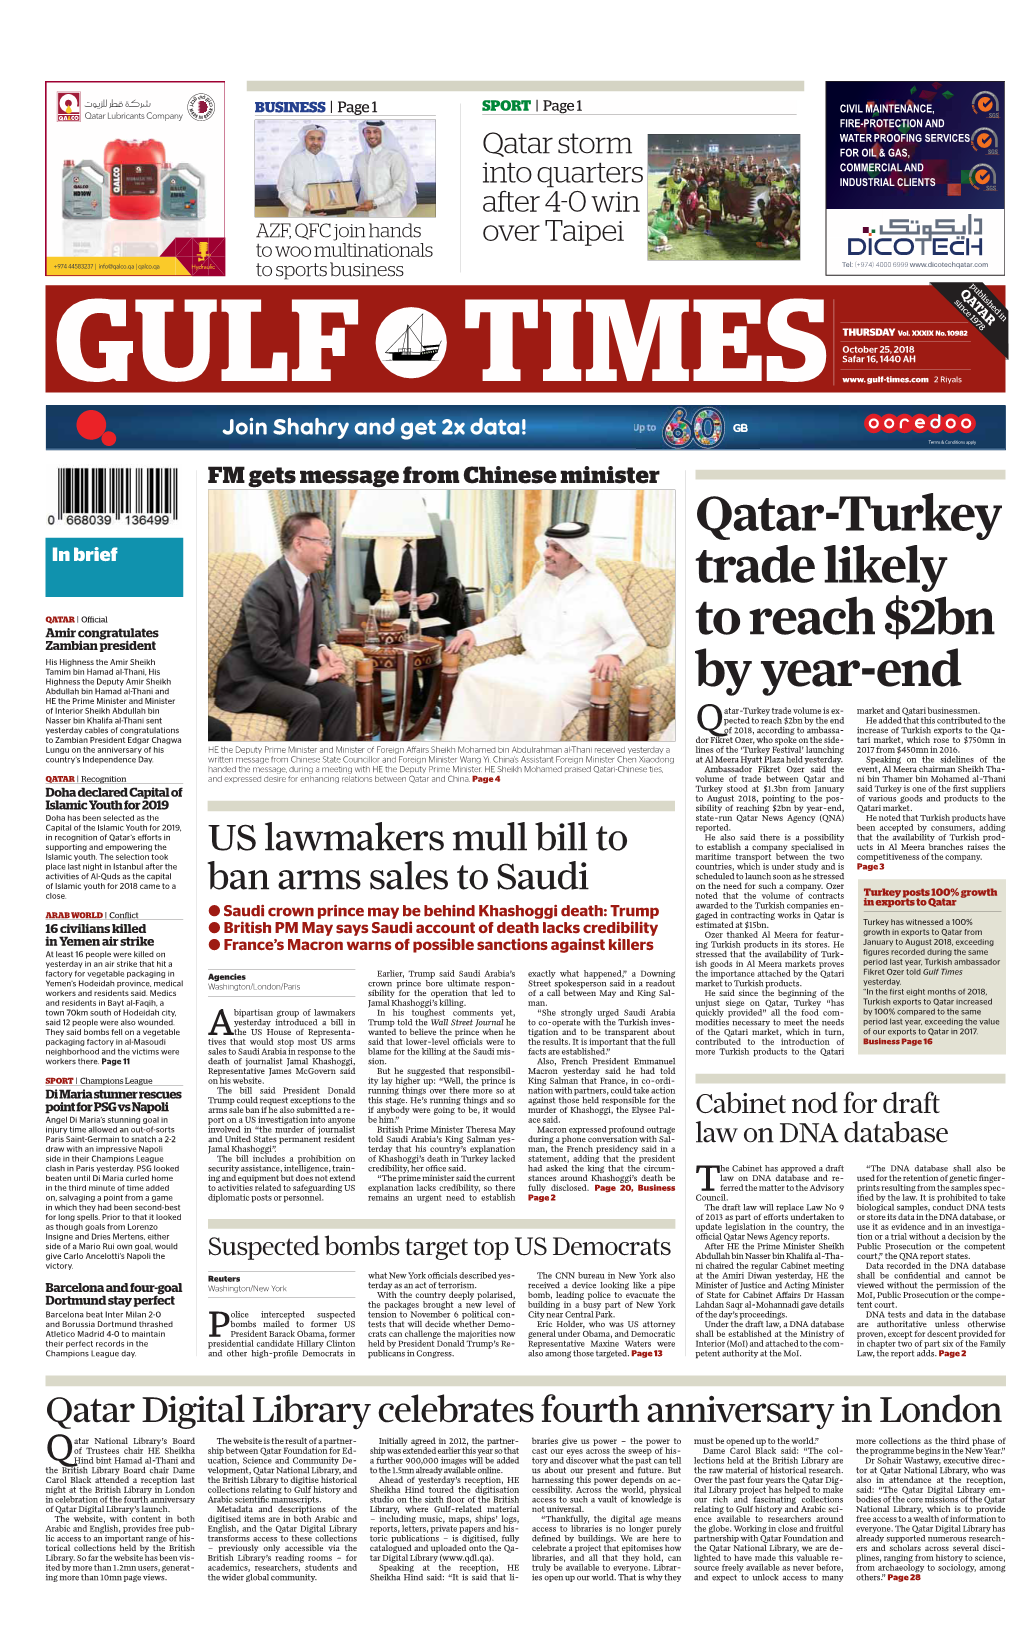 Qatar-Turkey Trade Likely to Reach $2Bn by Year-End